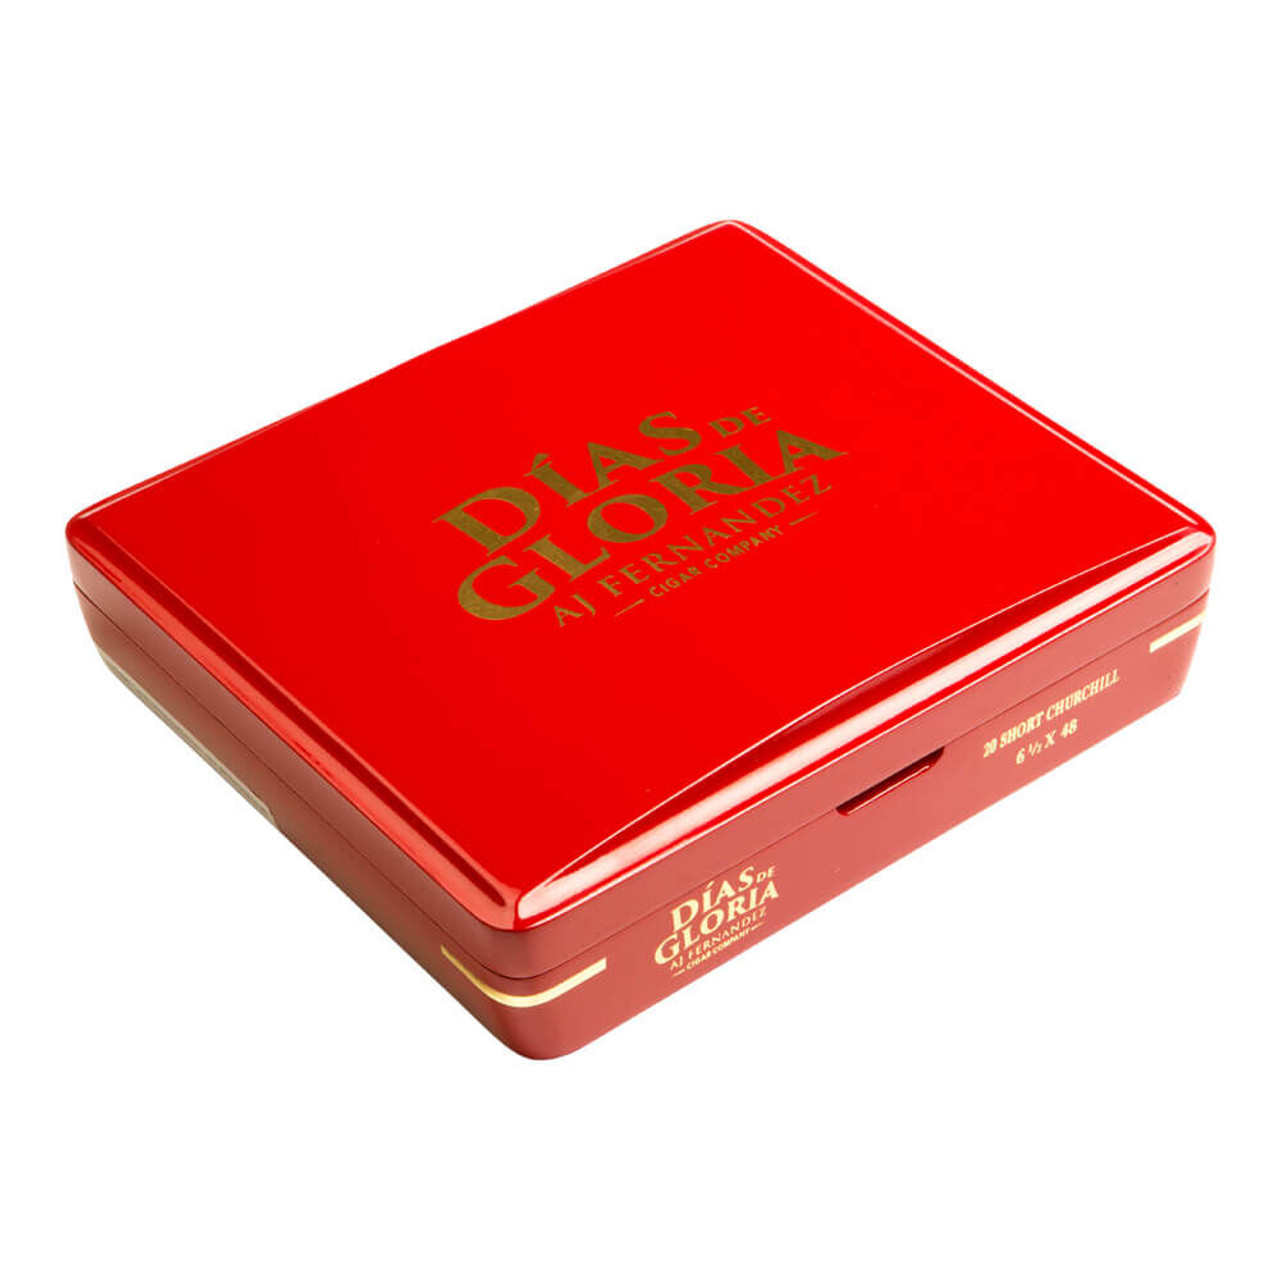 AJ Fernandez Dias de Gloria Short Churchill Cigars - 6.5 x 48 (Box of 20) *Box